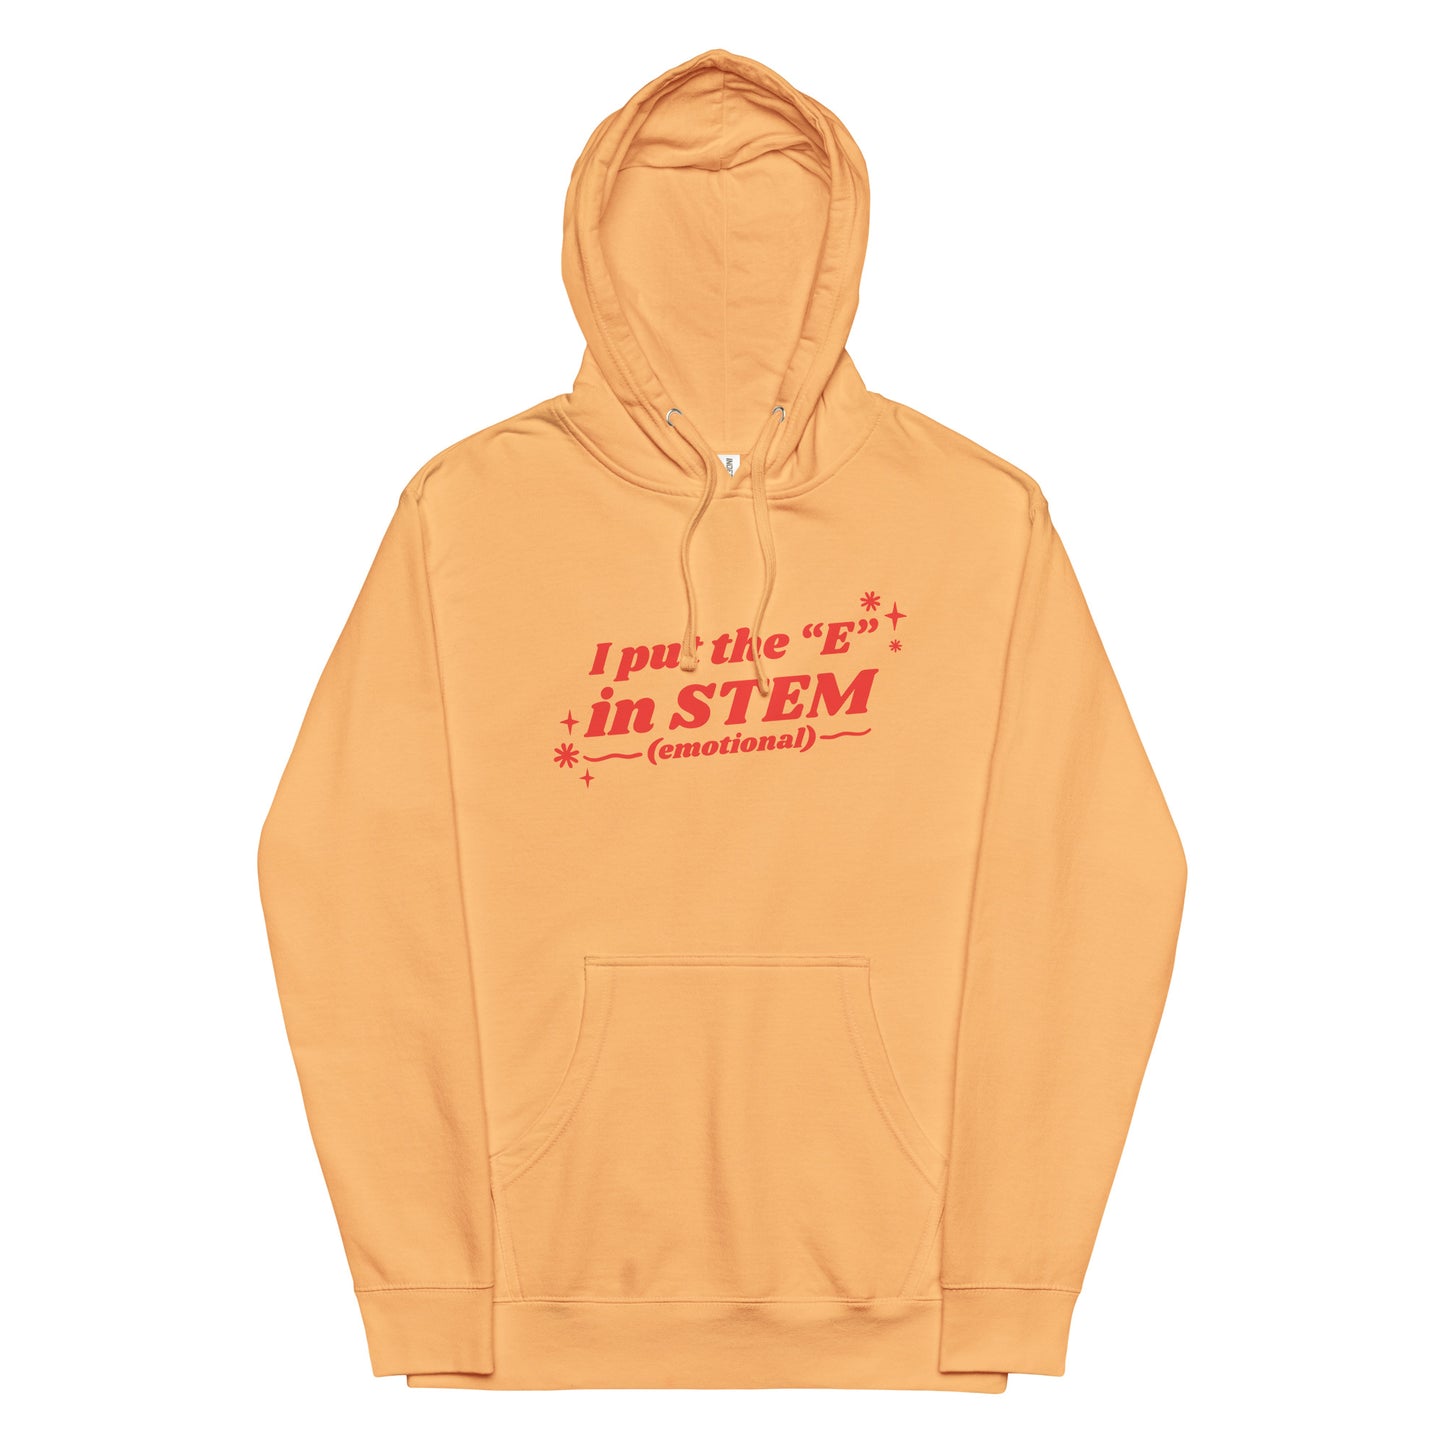 I Put the "E" in STEM Unisex hoodie